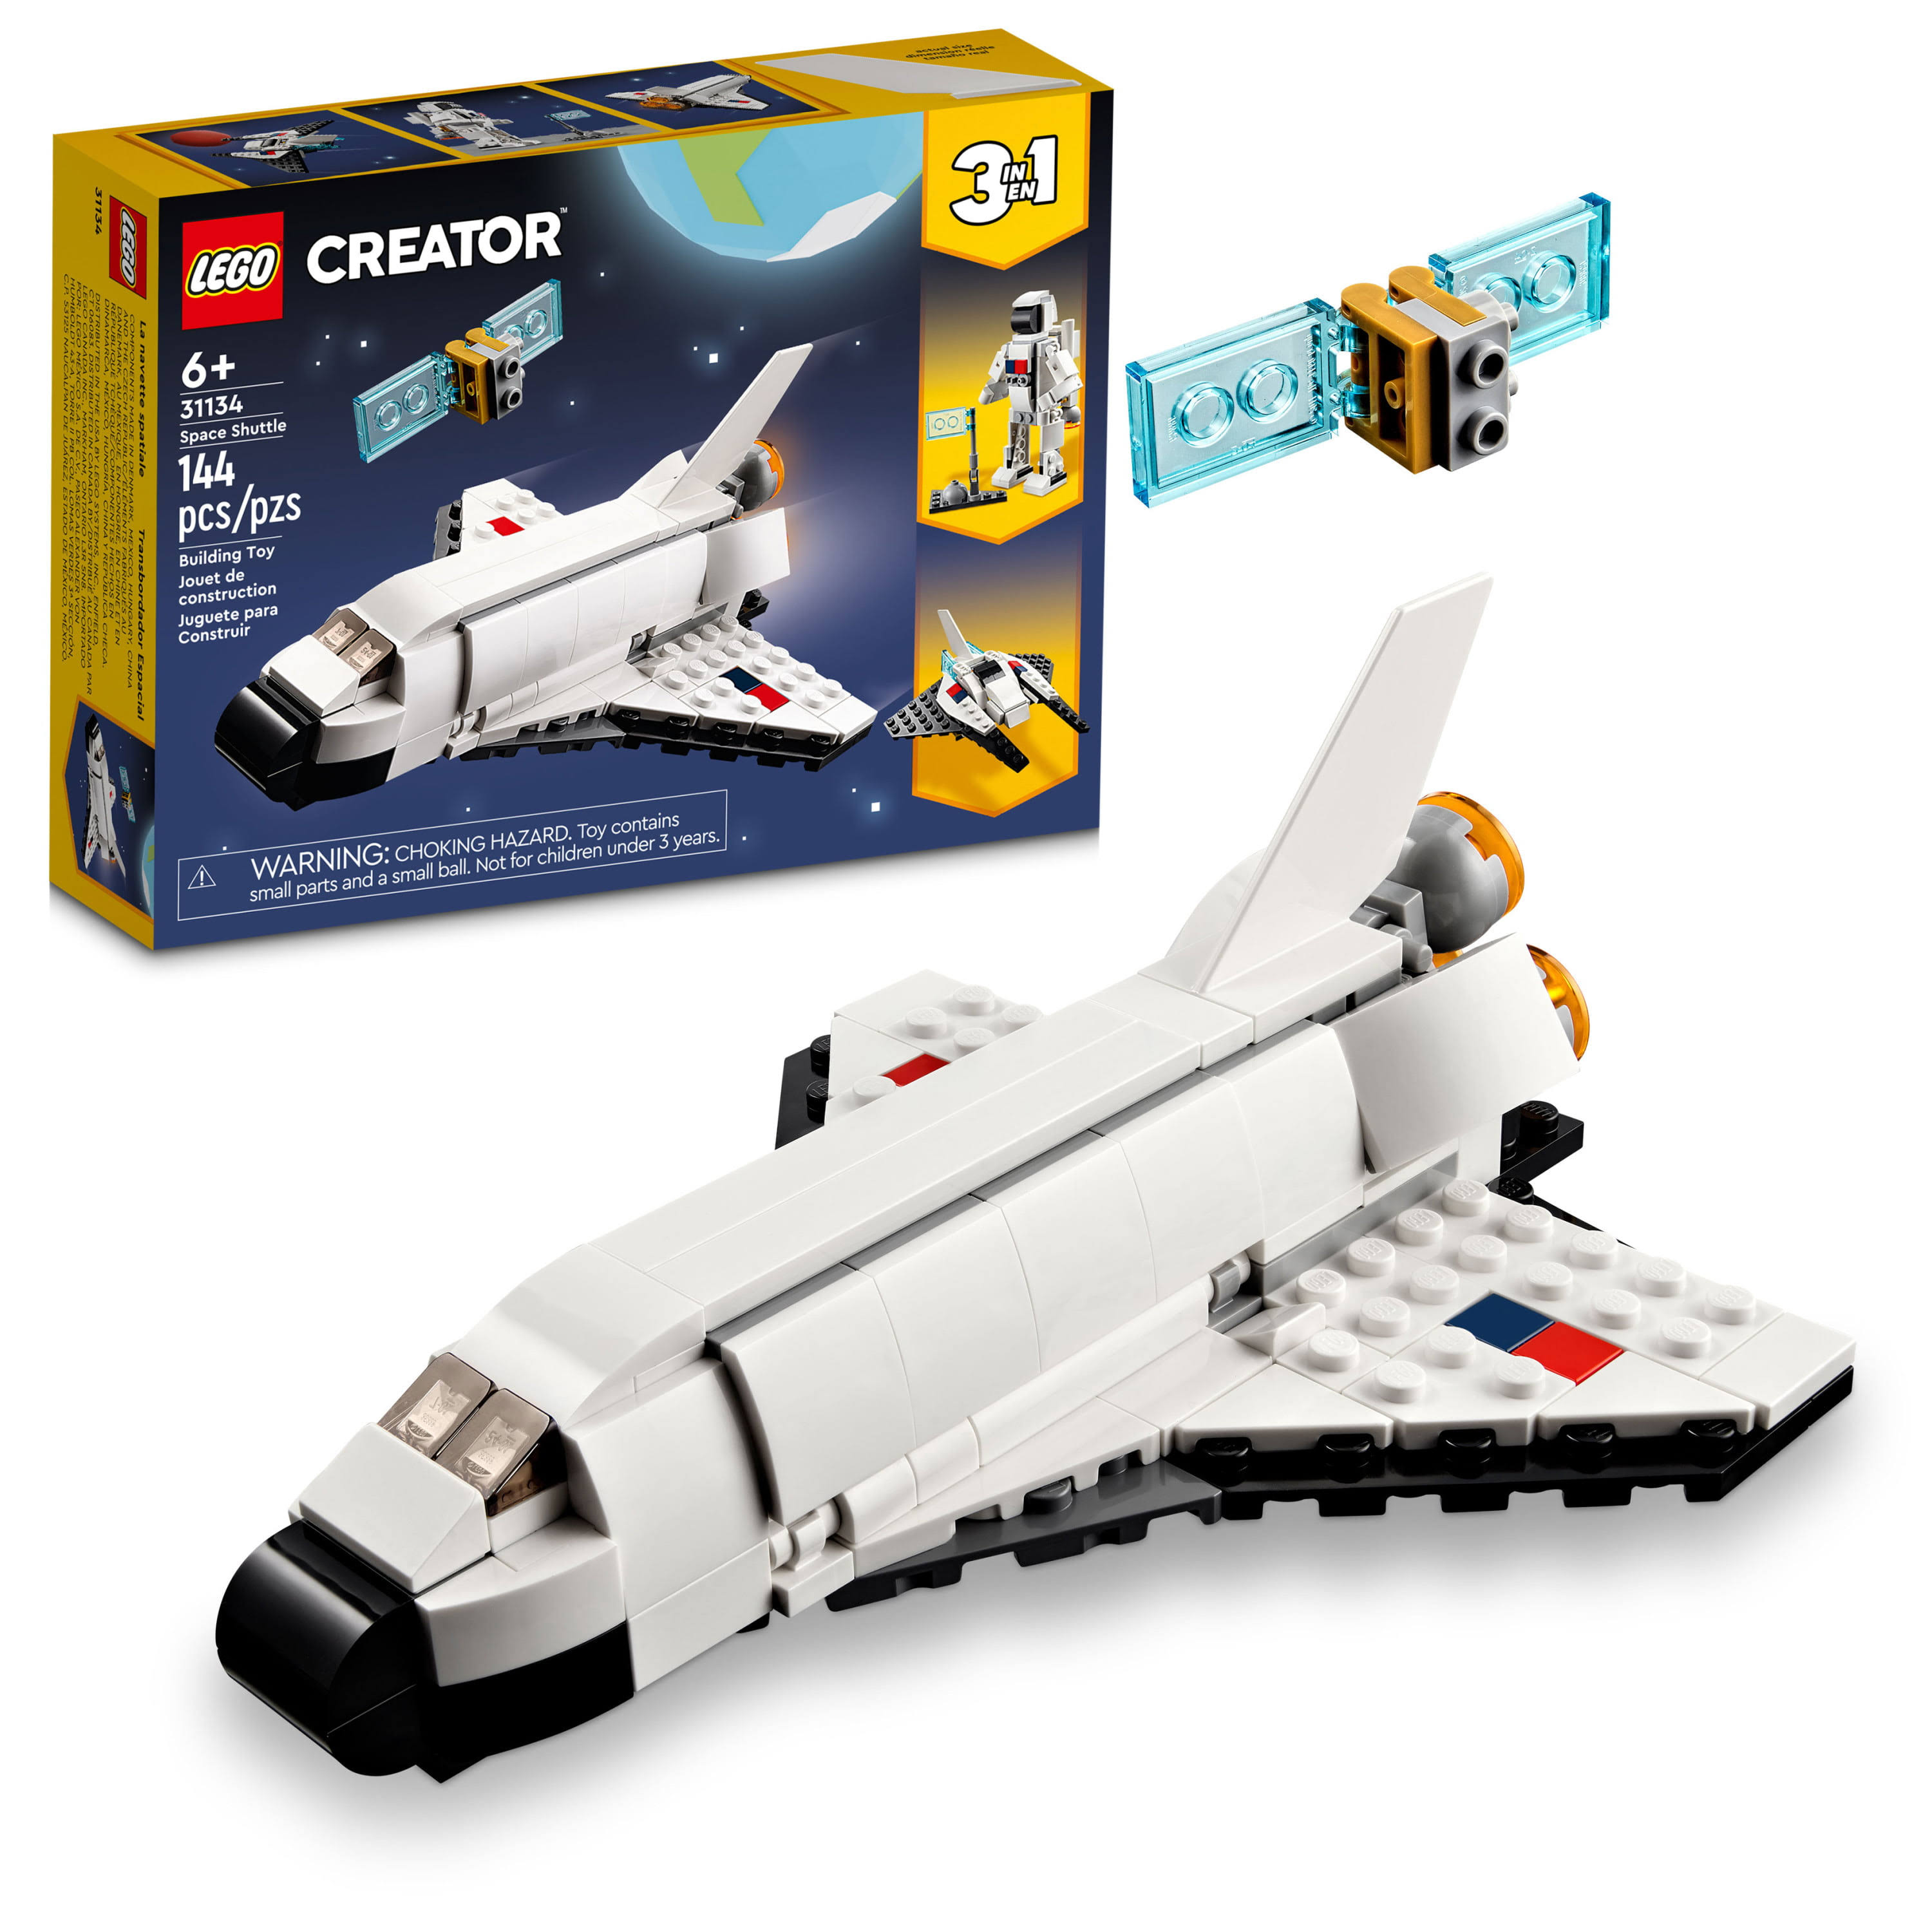 LEGO Creator - 31134 - Space Shuttle